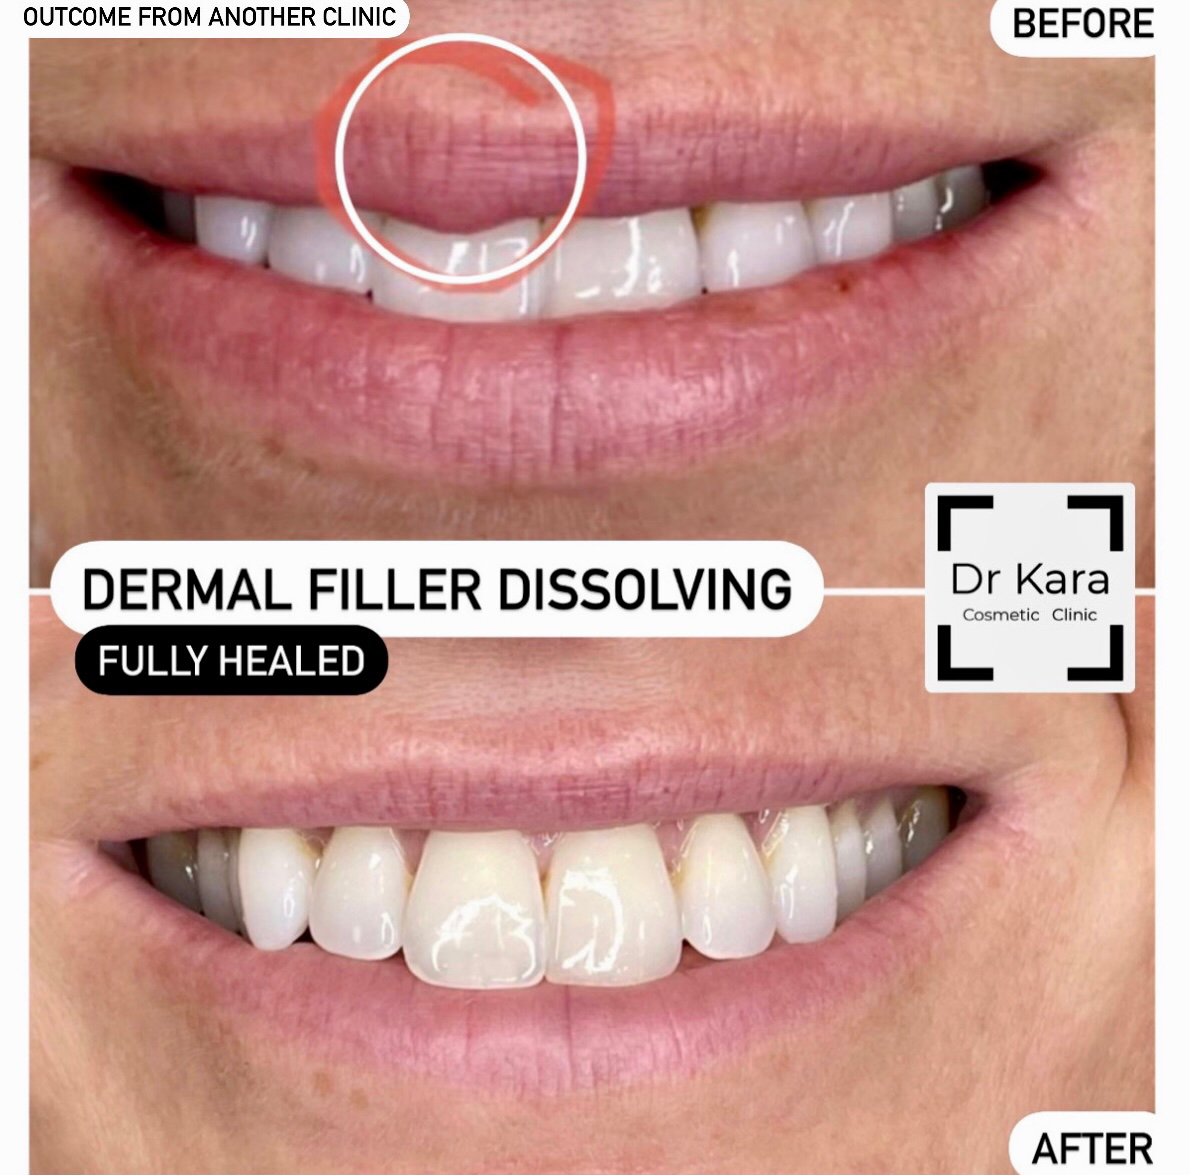 Lip filler dissolving by Dr Kara cosmetic clinic